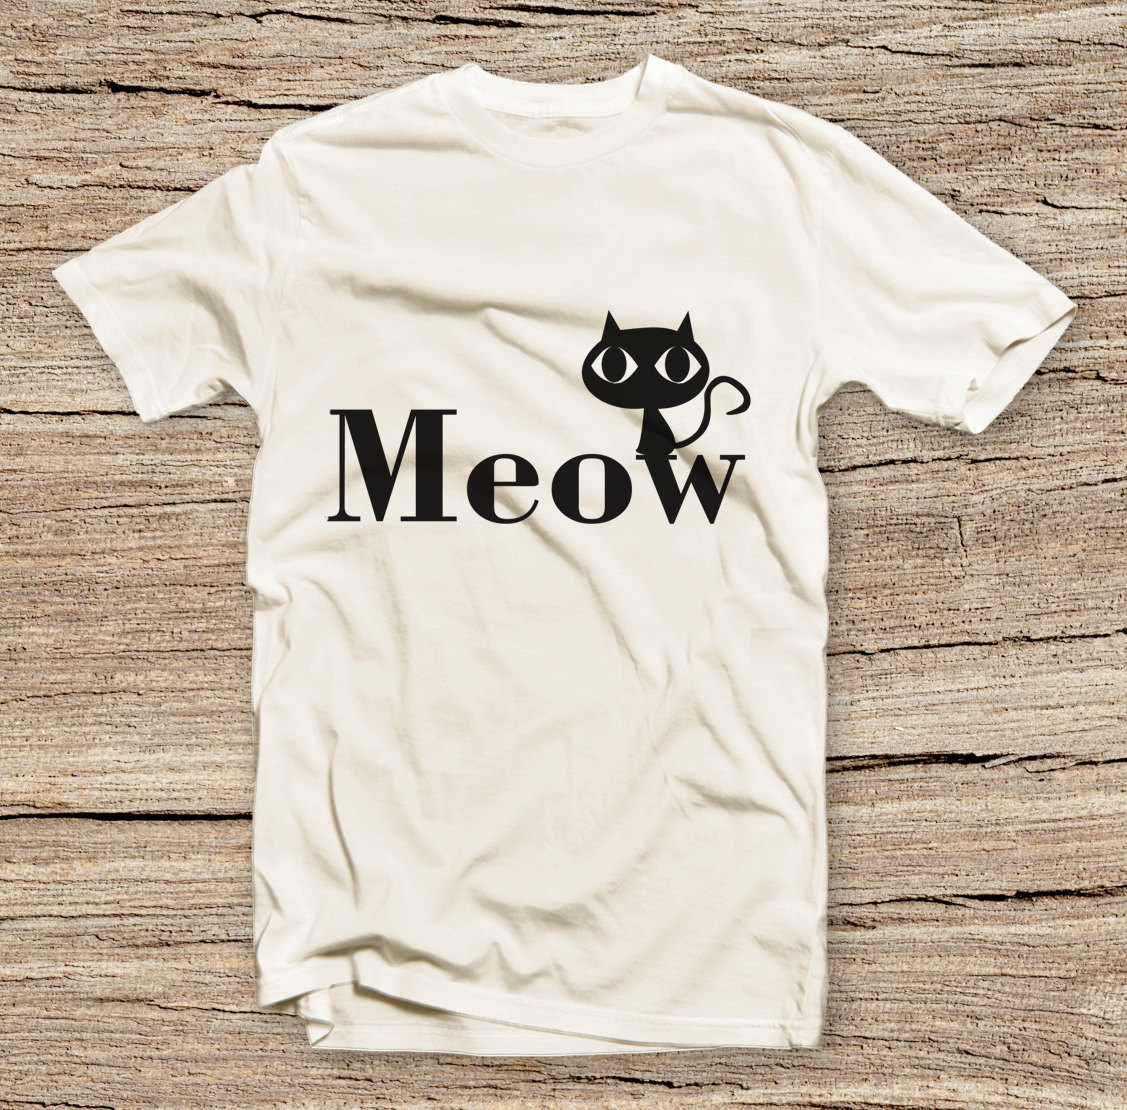 Pts-031 Meow T-shirt, Cute Cat T-shirt, Fashion Style Printed T-shirt